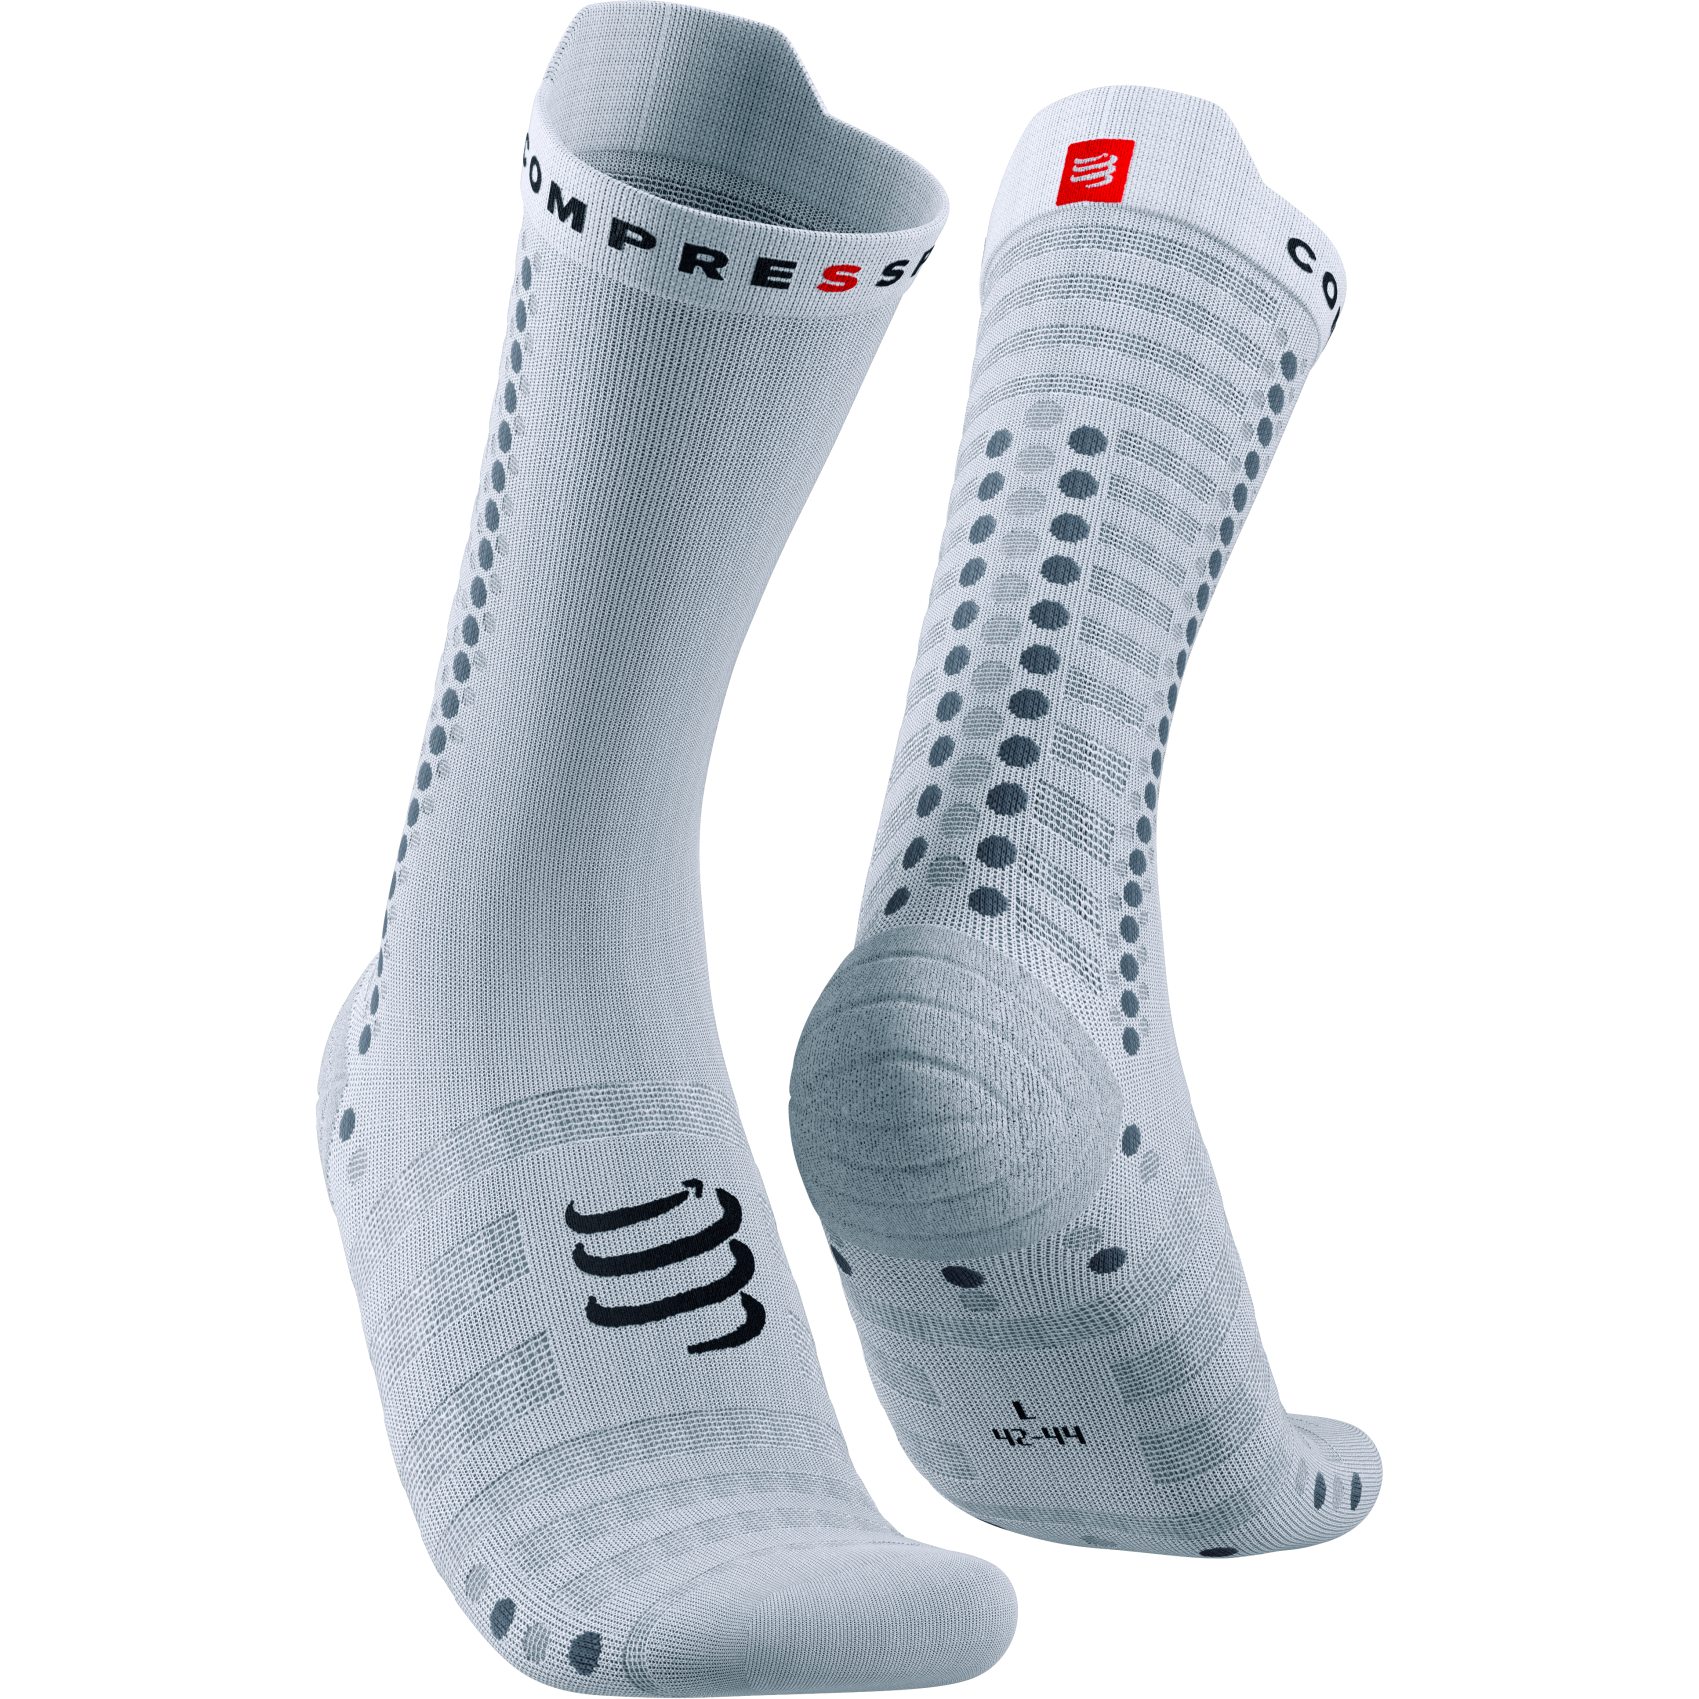 Image of Compressport Pro Racing Compression Socks v4.0 Ultralight Bike - white/grey